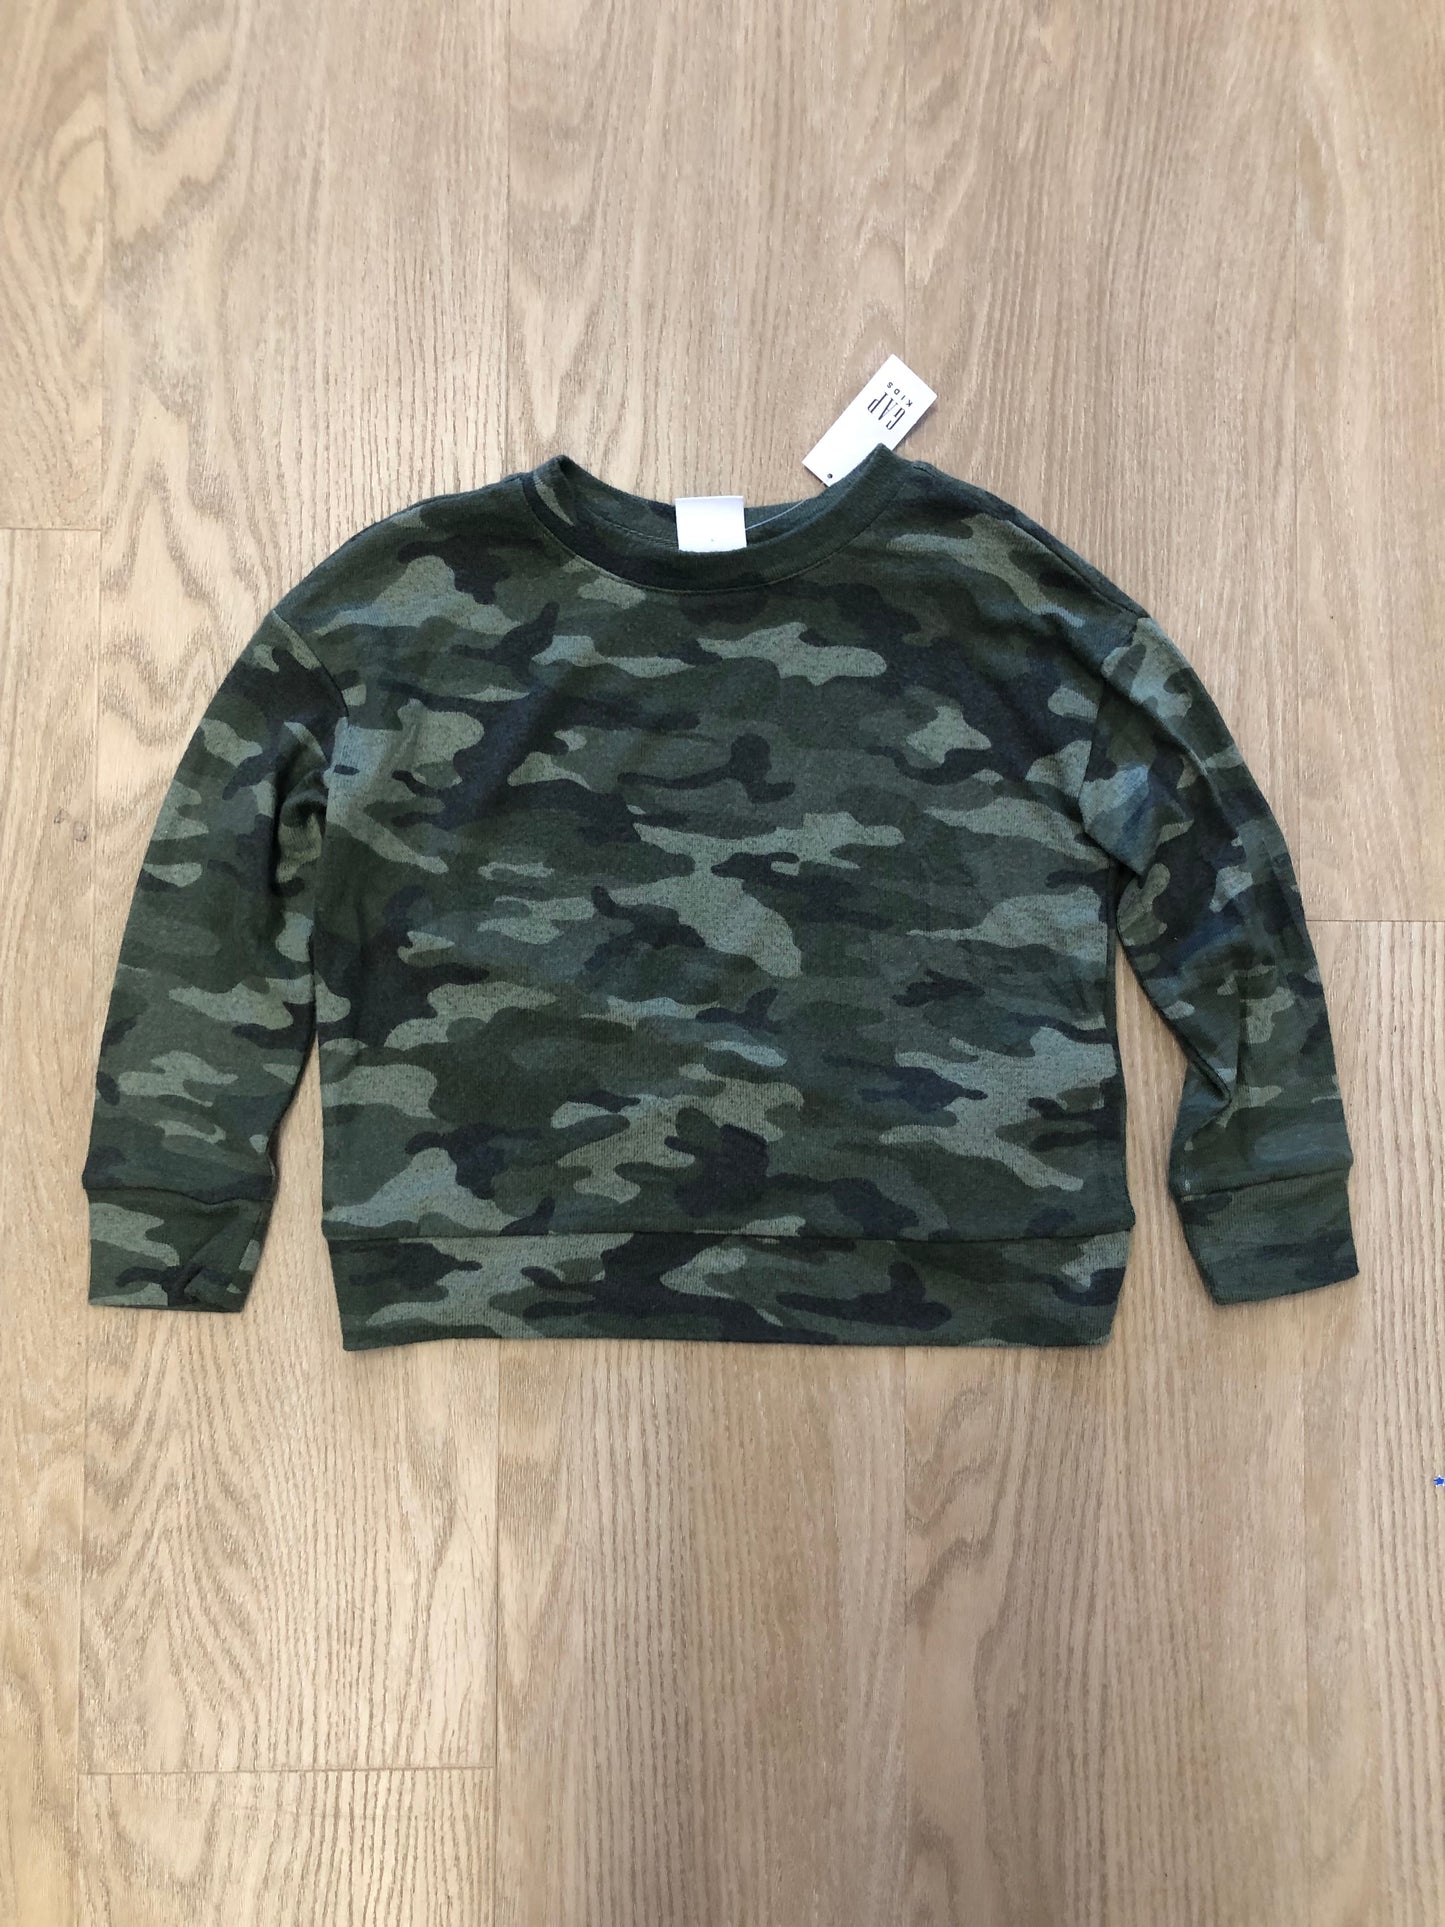 GAP Child Size 4 hunter green Camouflage Shirt